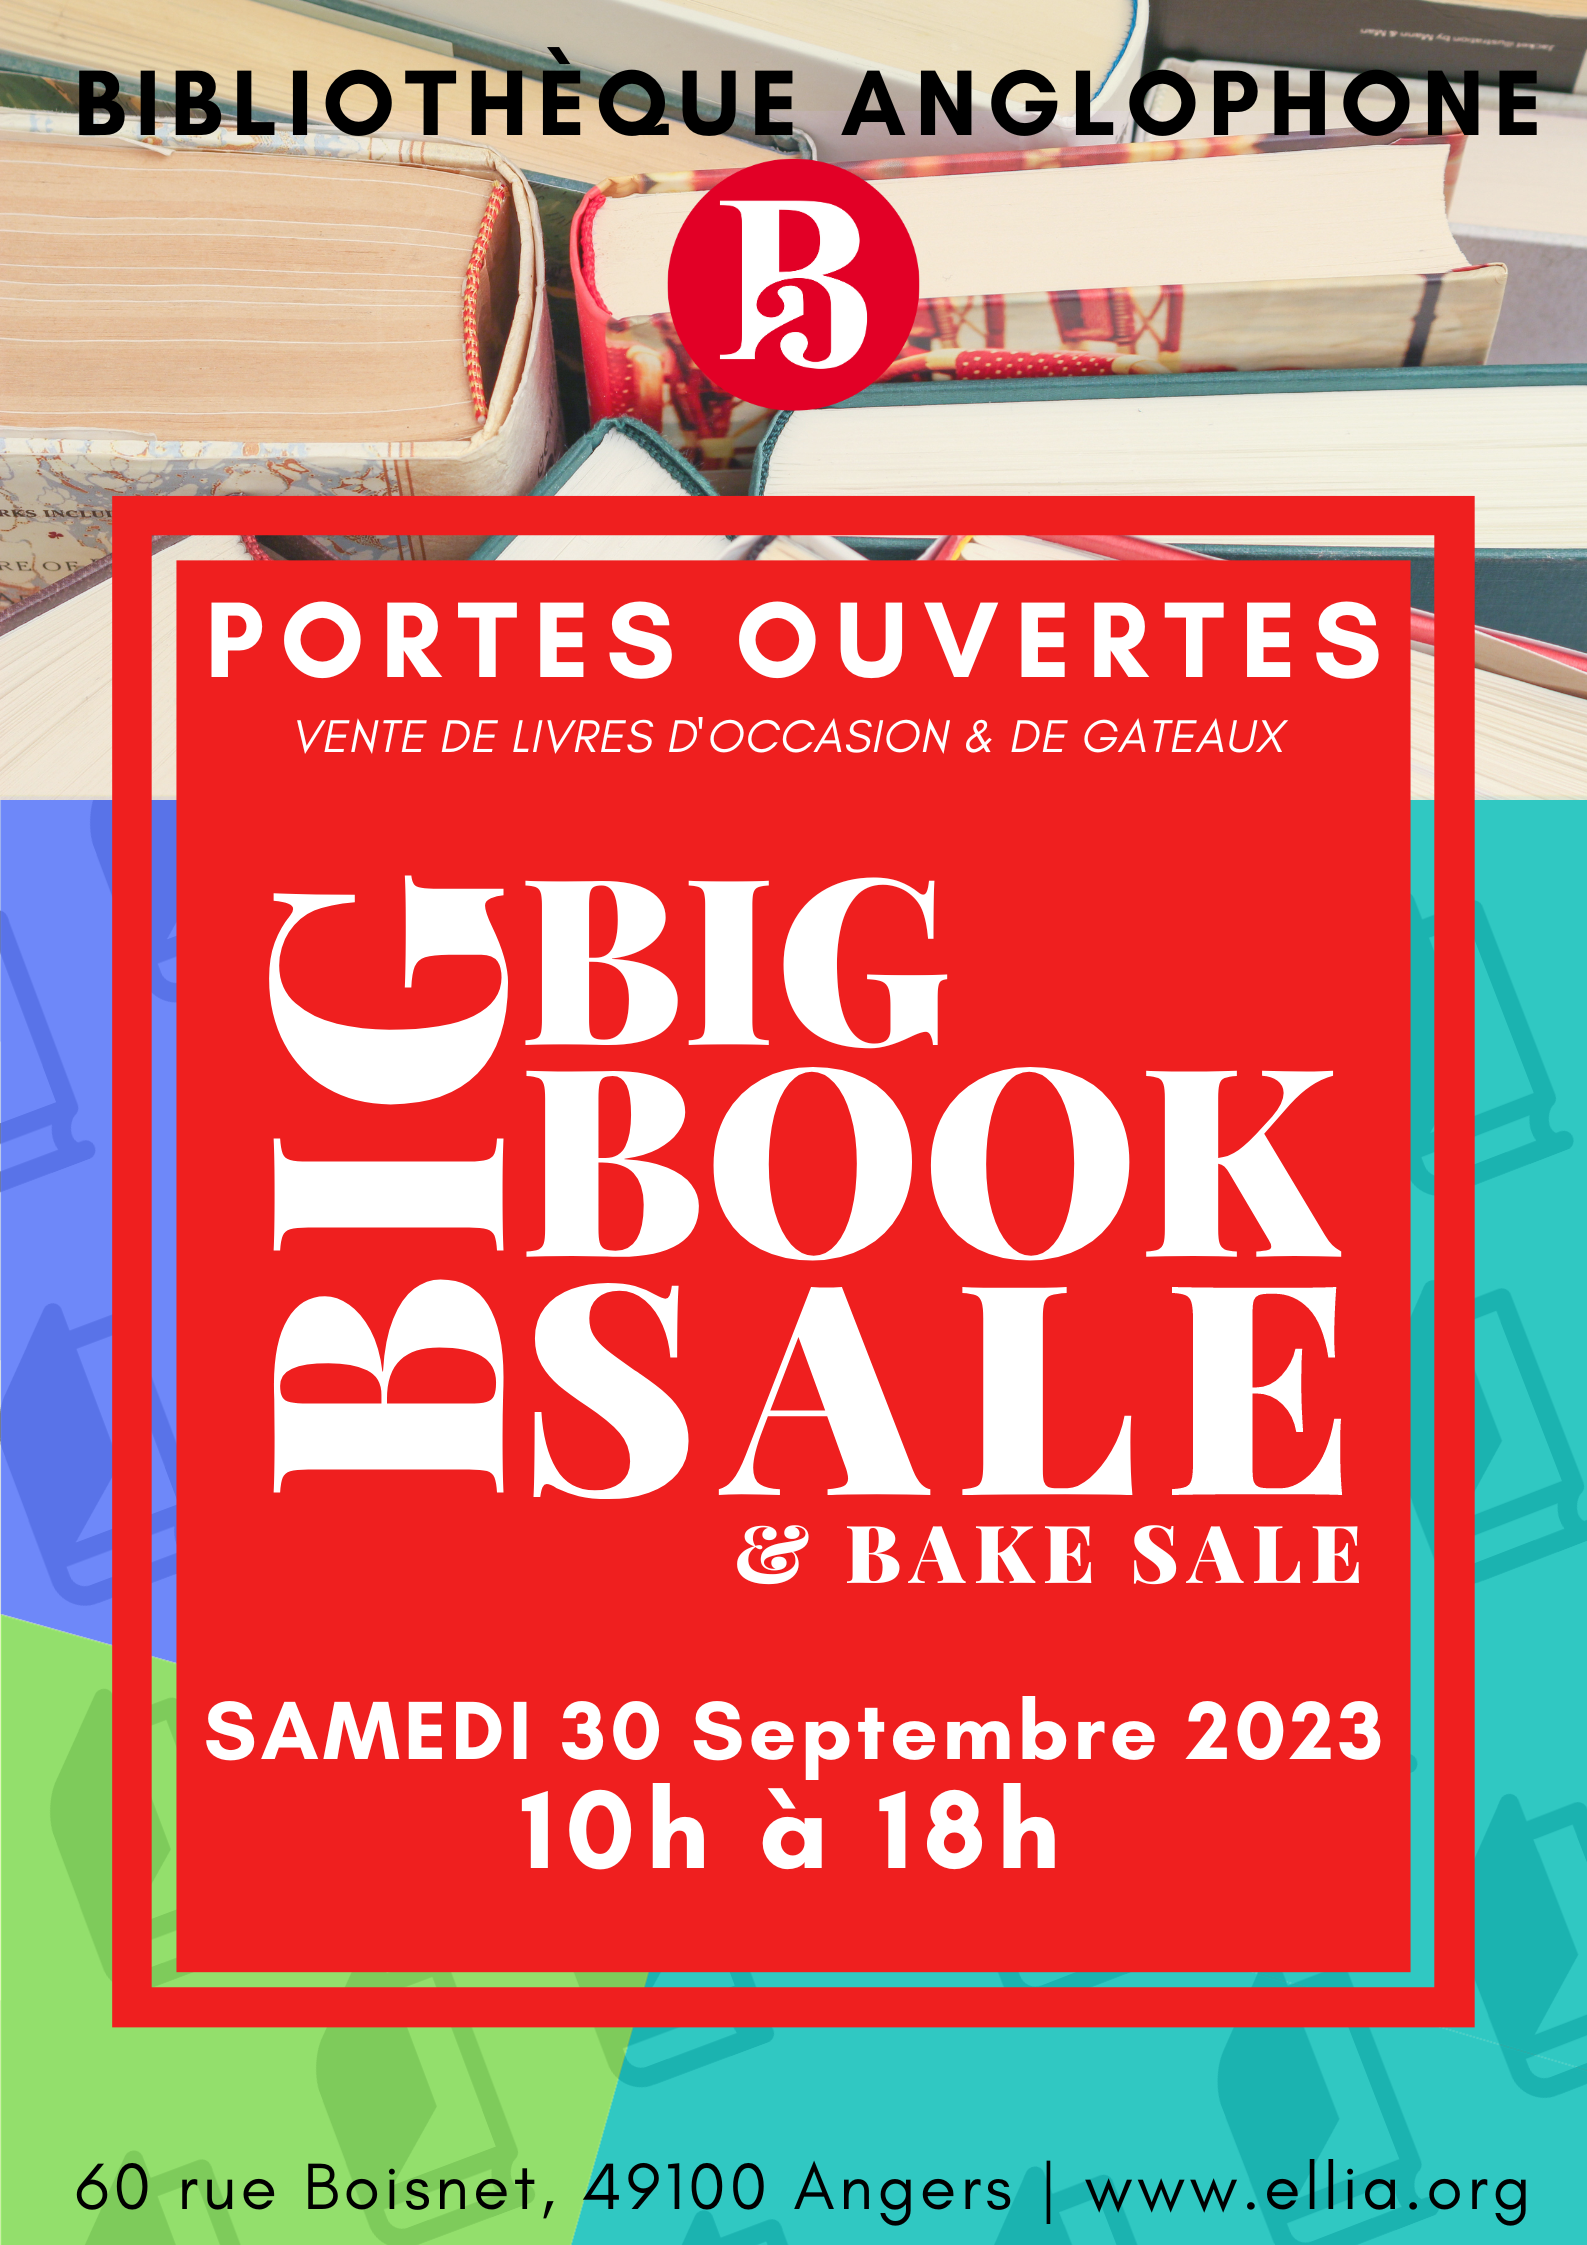 Open house, BBB (big, big book sale) & bake sale